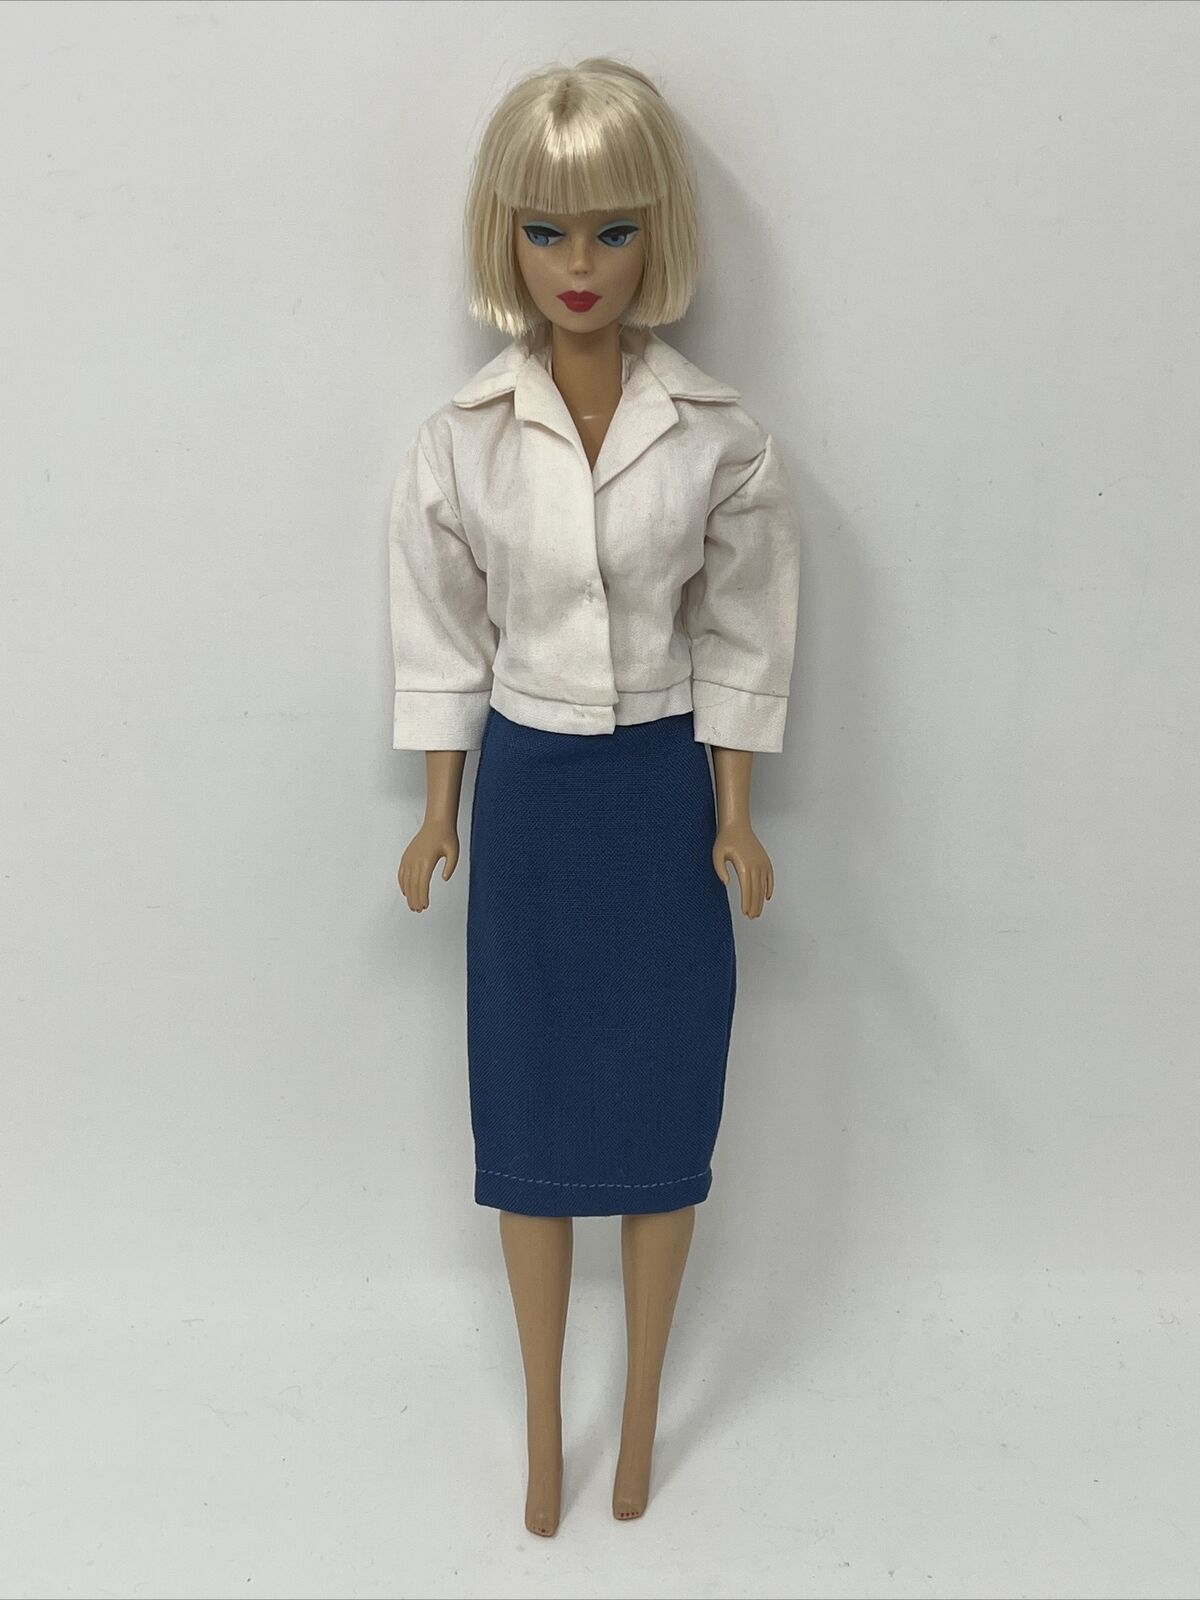 Vintage Barbie PREMIER CLONE Clothes Doll Outfit BLUE SKIRT White